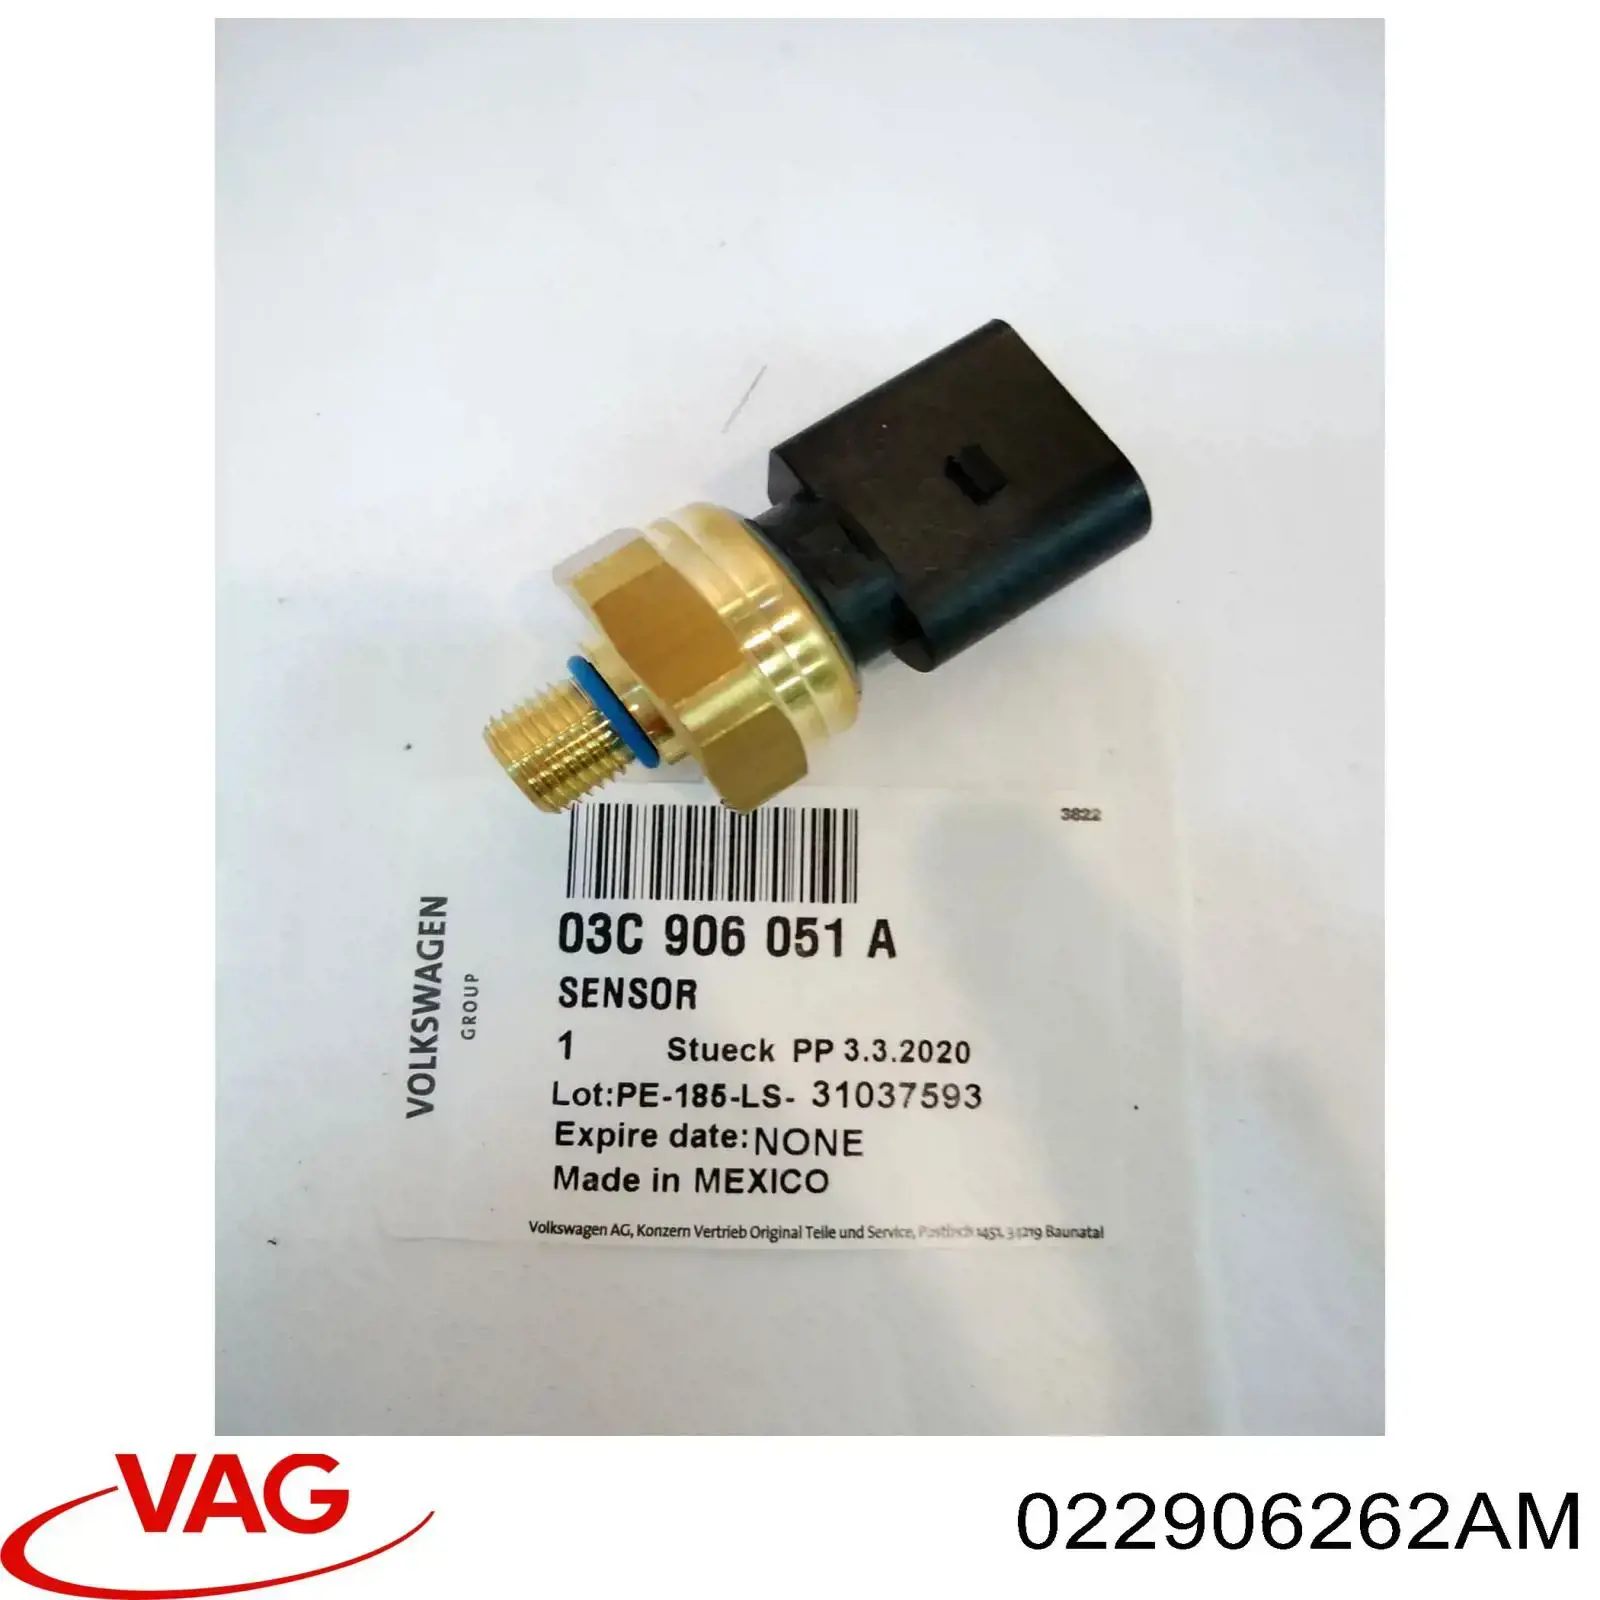 022906262AM VAG sensor, temperatura del refrigerante (encendido el ventilador del radiador)